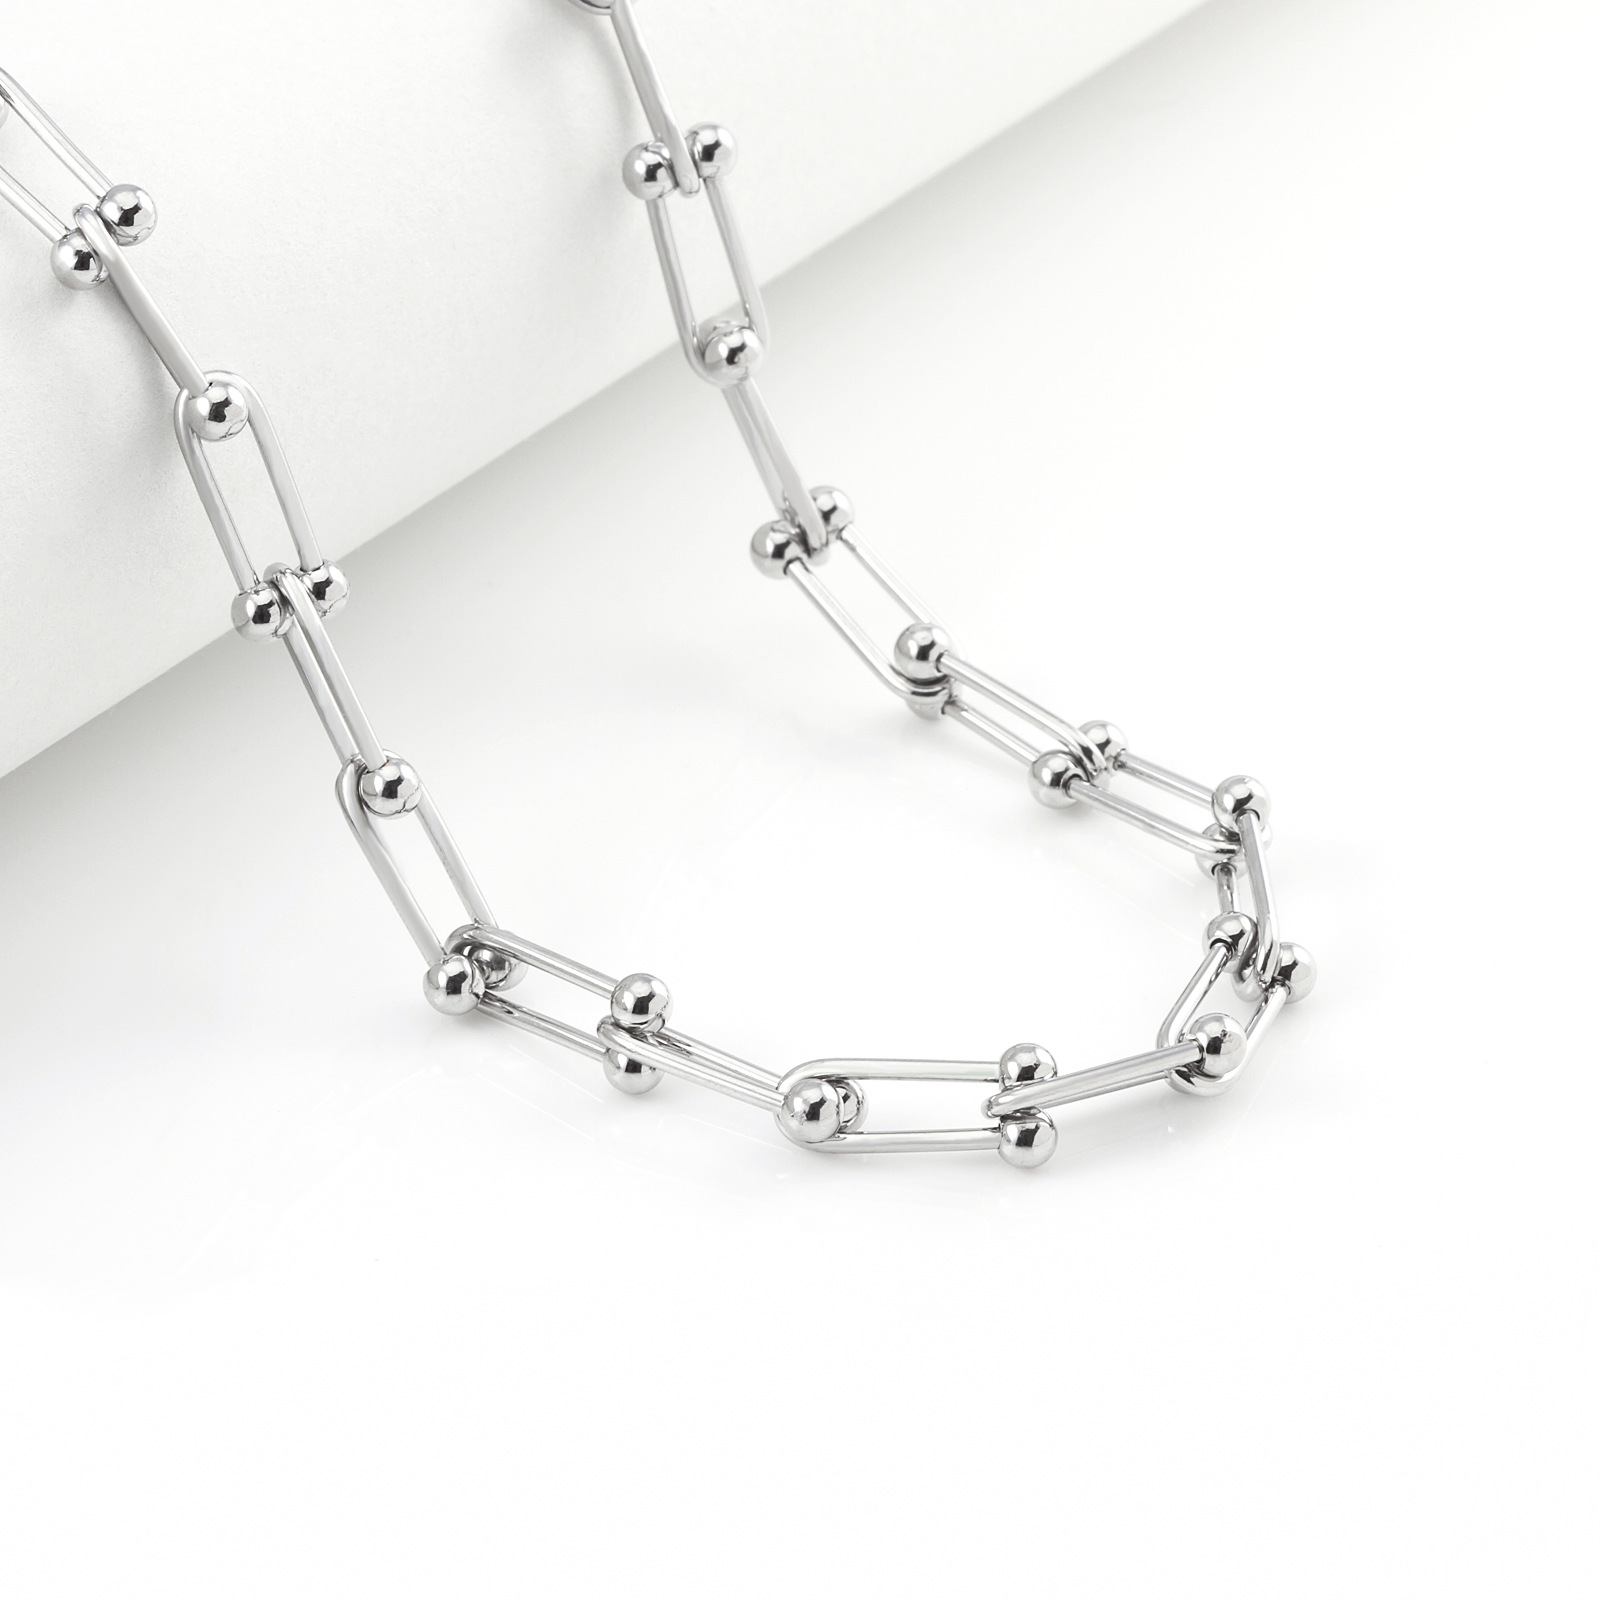 Necklace silver